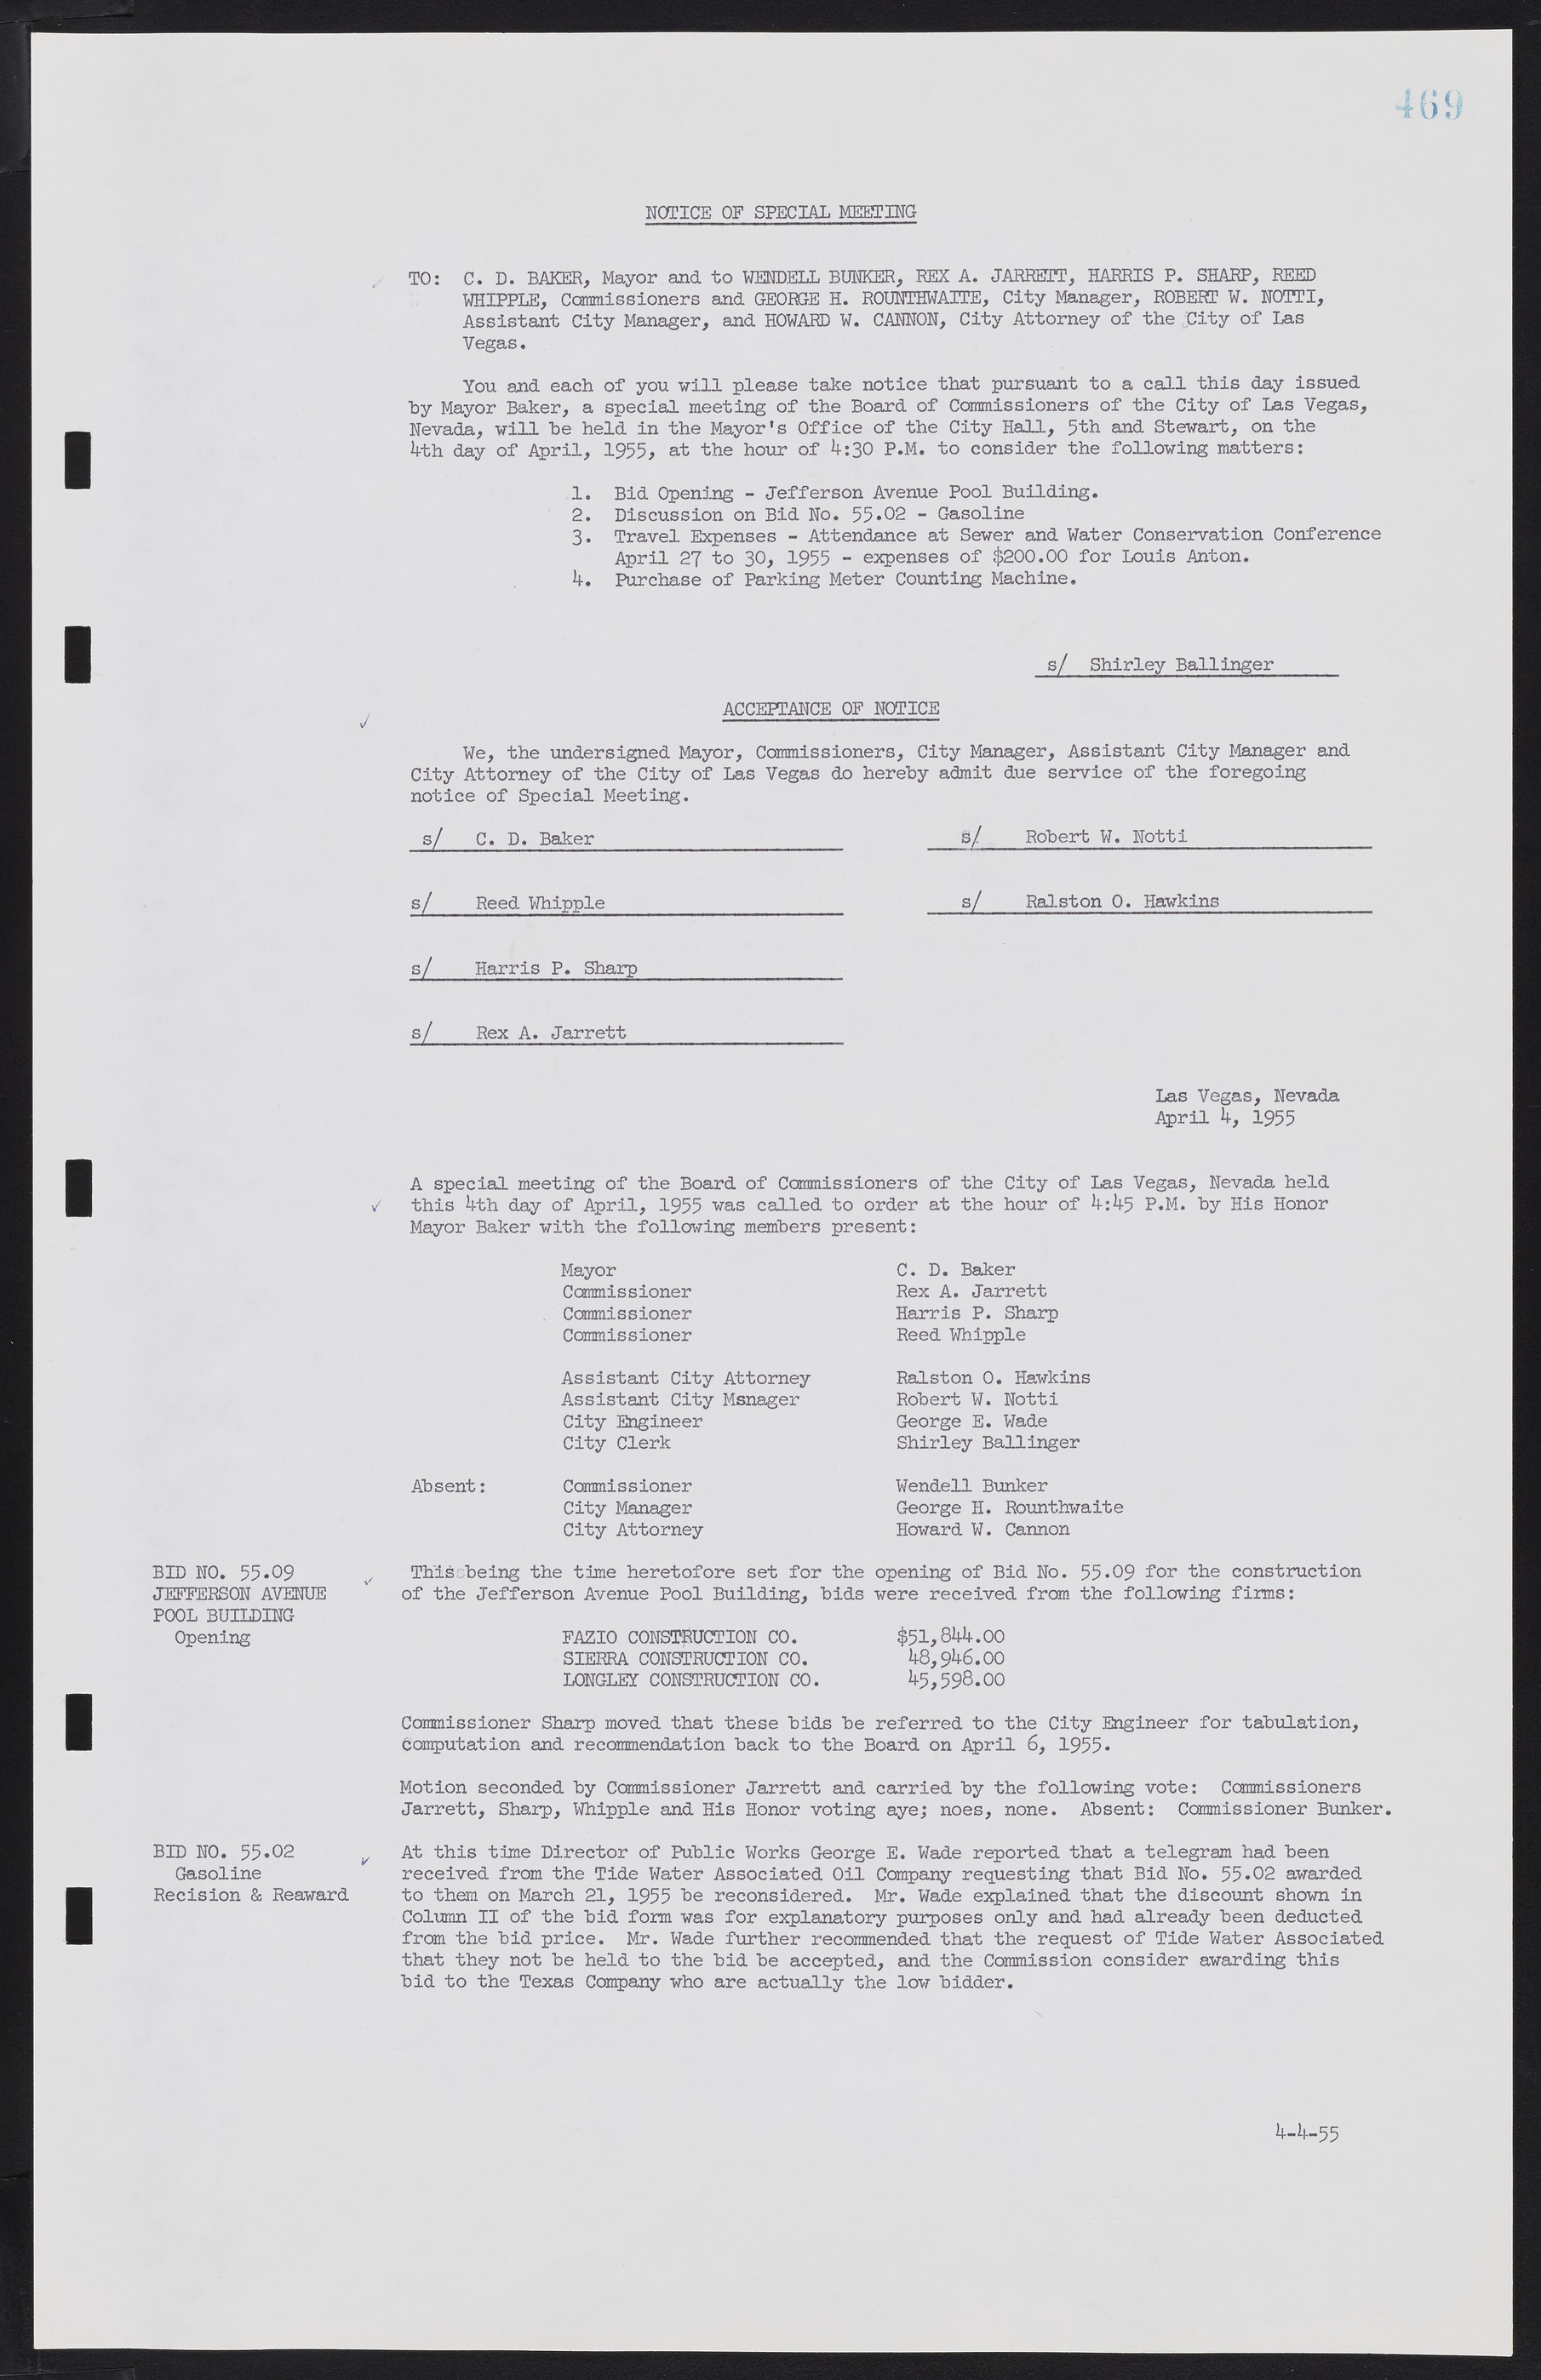 Las Vegas City Commission Minutes, February 17, 1954 to September 21, 1955, lvc000009-475